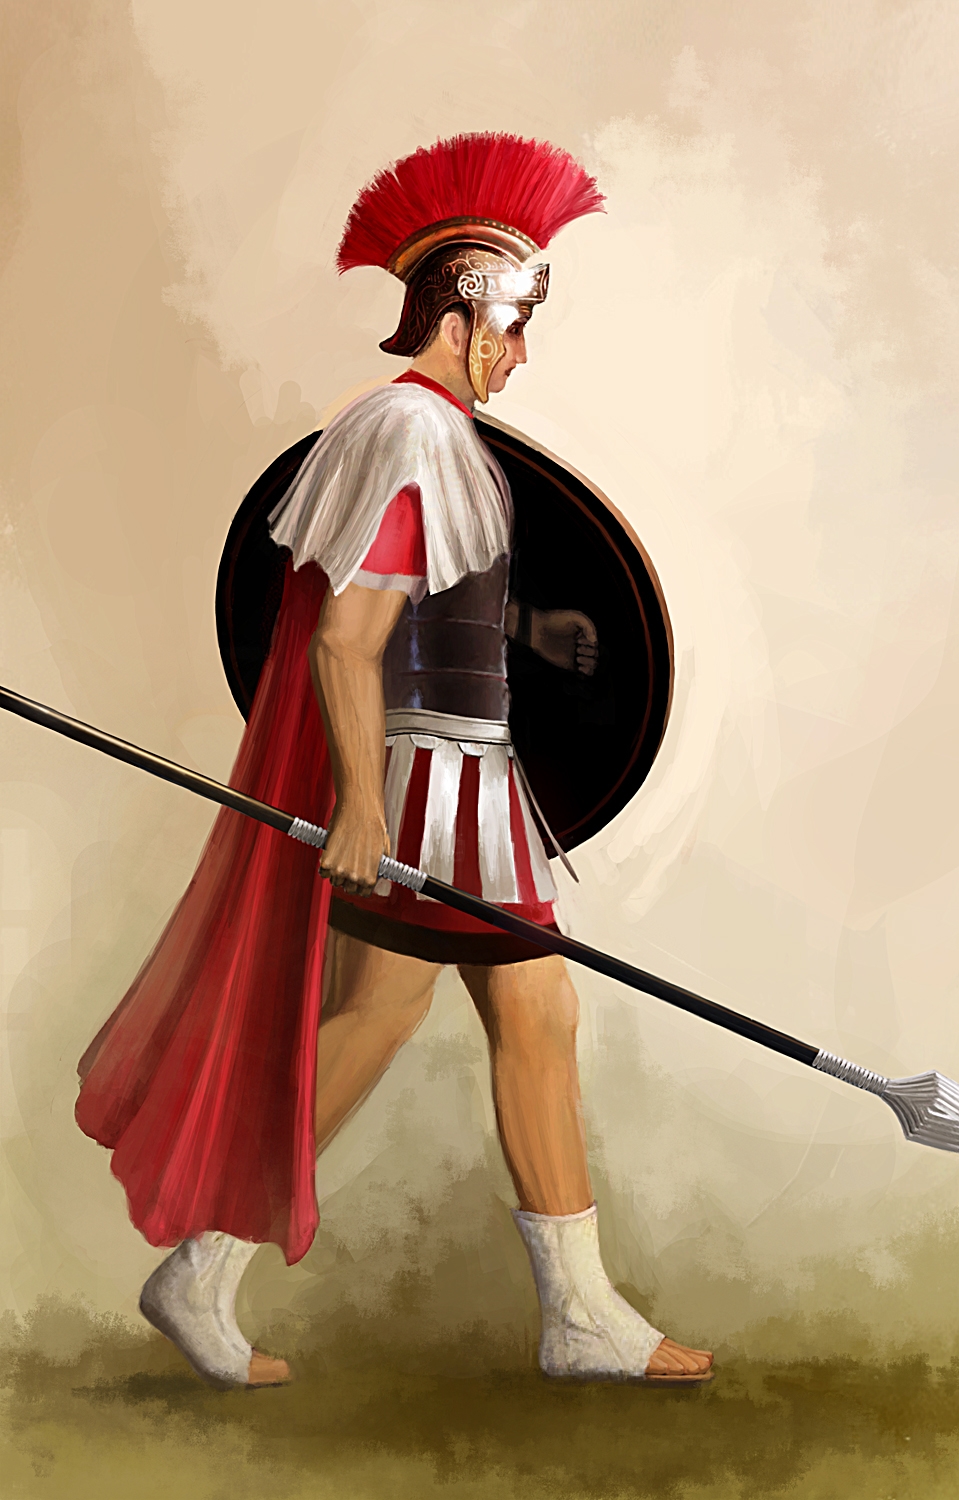 Praetorian Guard